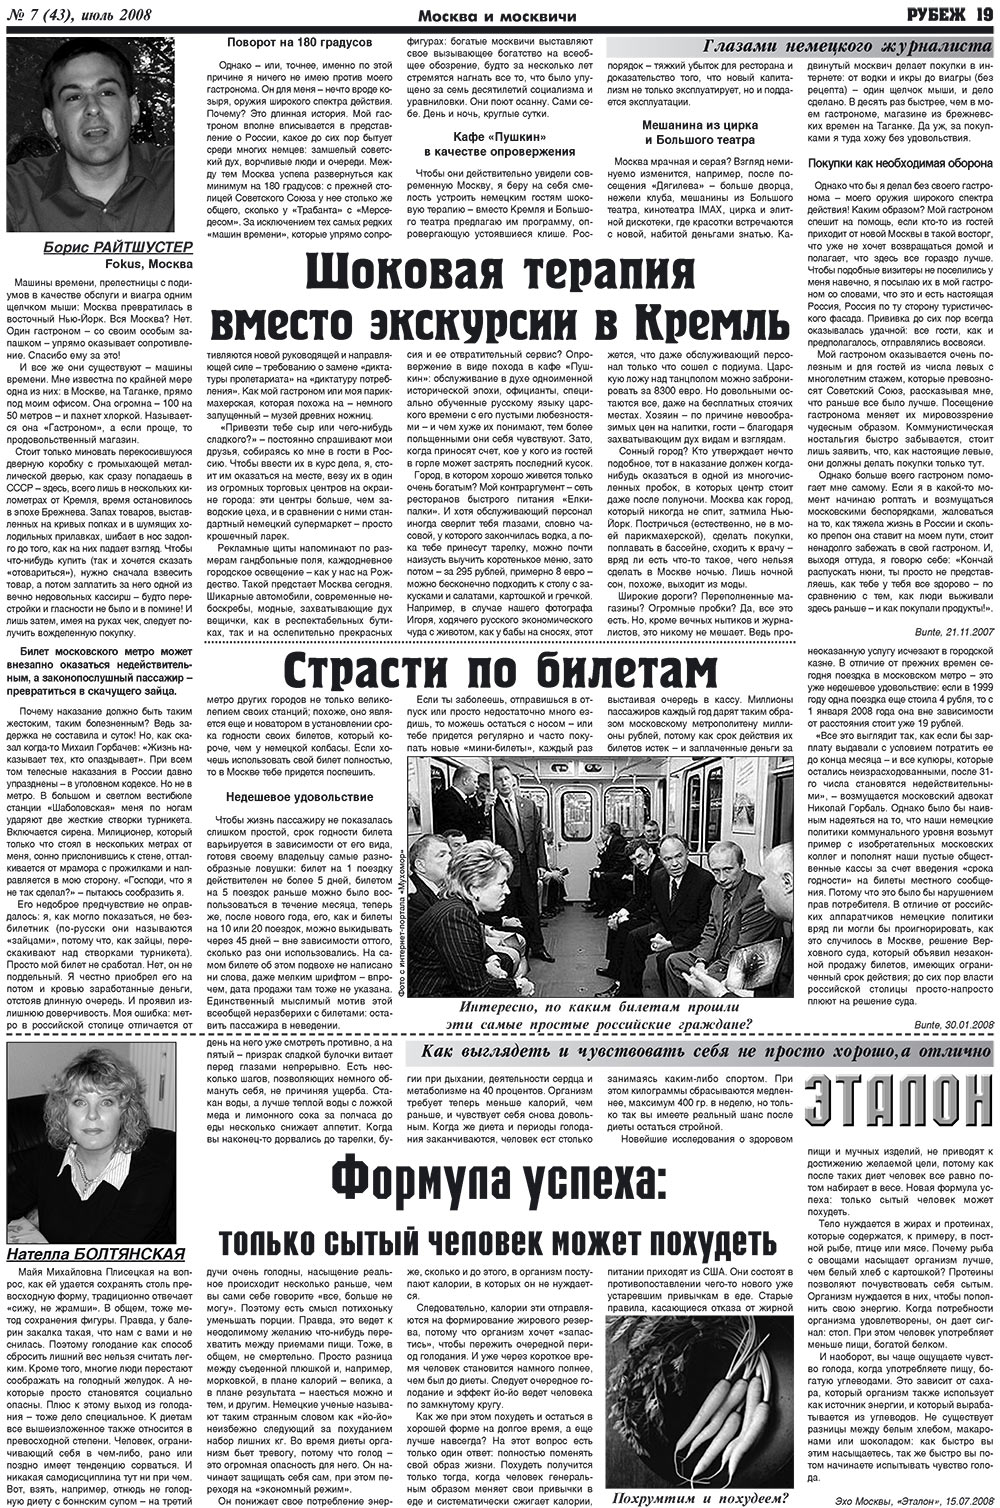 Рубеж, газета. 2008 №7 стр.19